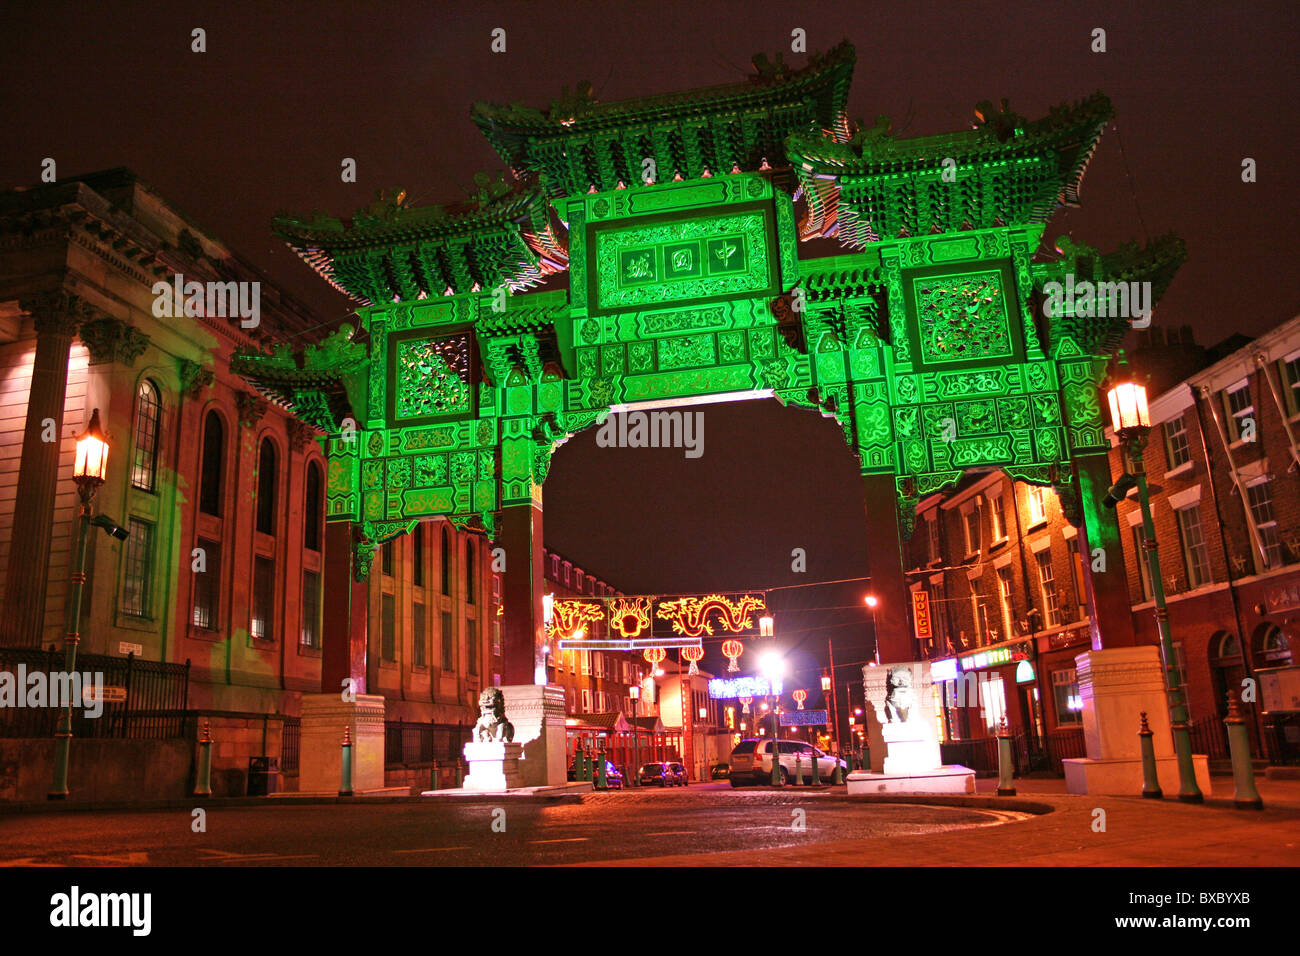 The Chinese Arch Illuminated At Night, Chinatown, Liverpool, Merseyside, UK Stock Photo